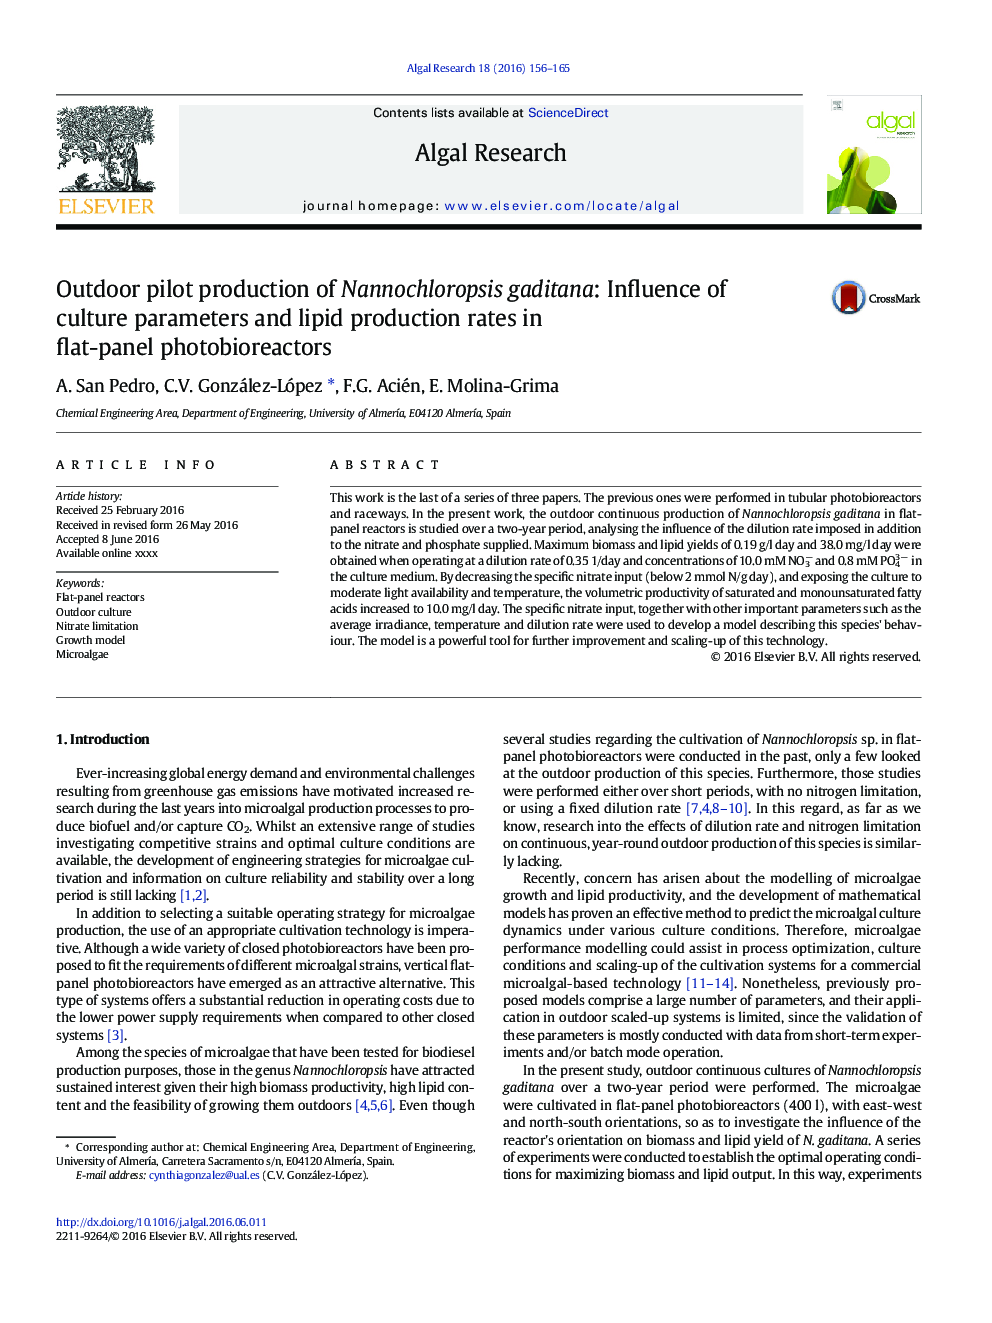 Outdoor pilot production of Nannochloropsis gaditana: Influence of culture parameters and lipid production rates in flat-panel photobioreactors